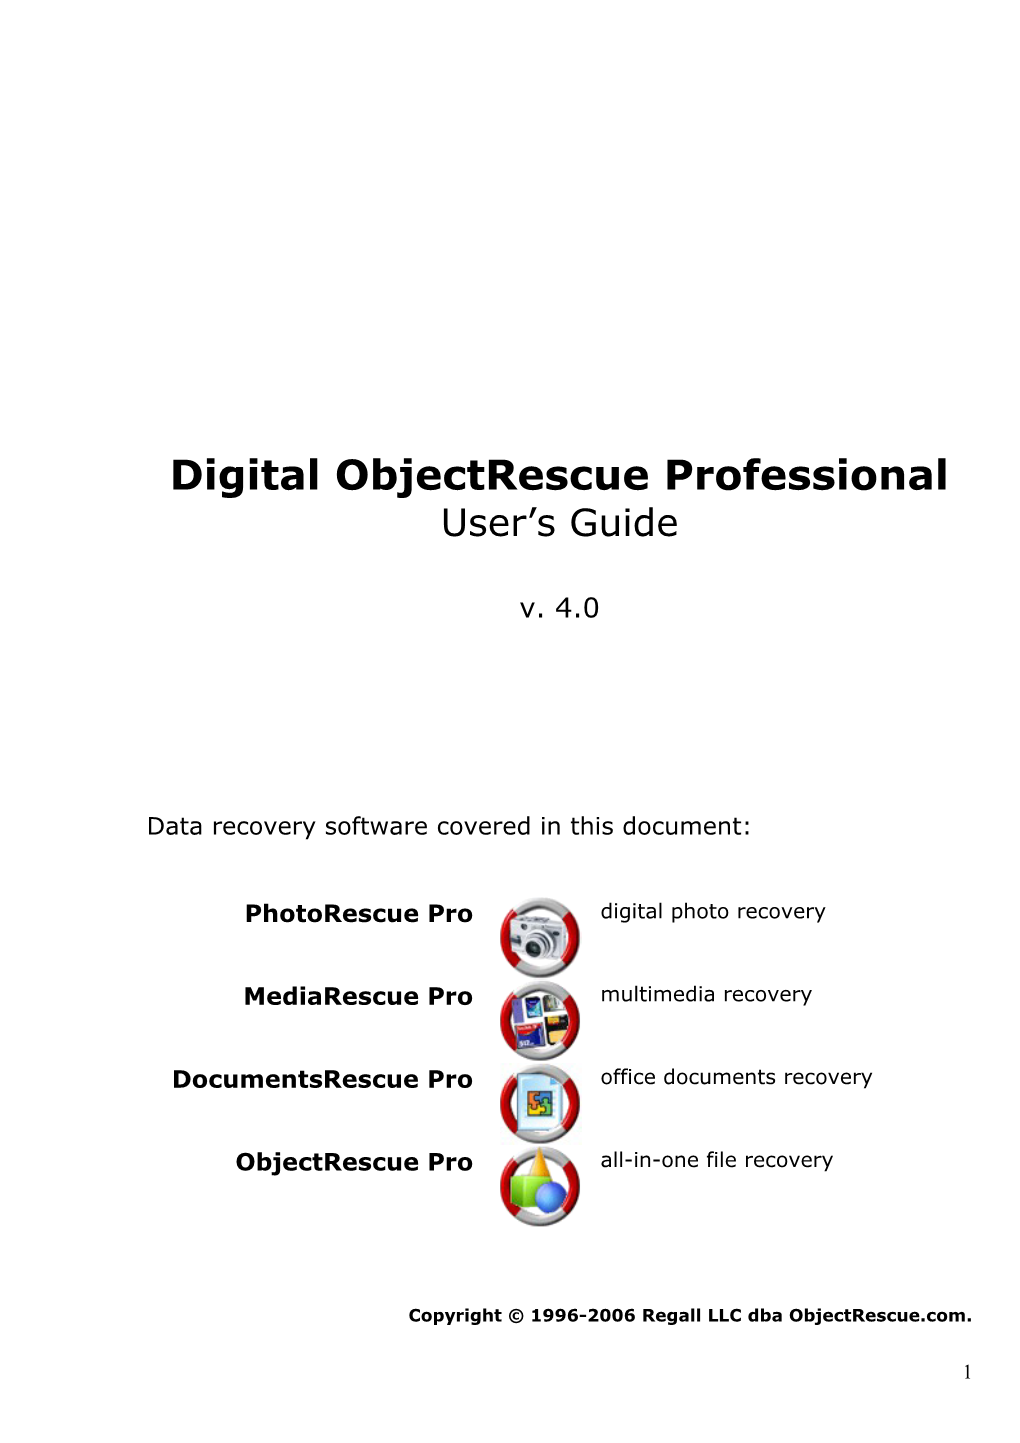 Digital Objectrescue Professional Manual V. 4